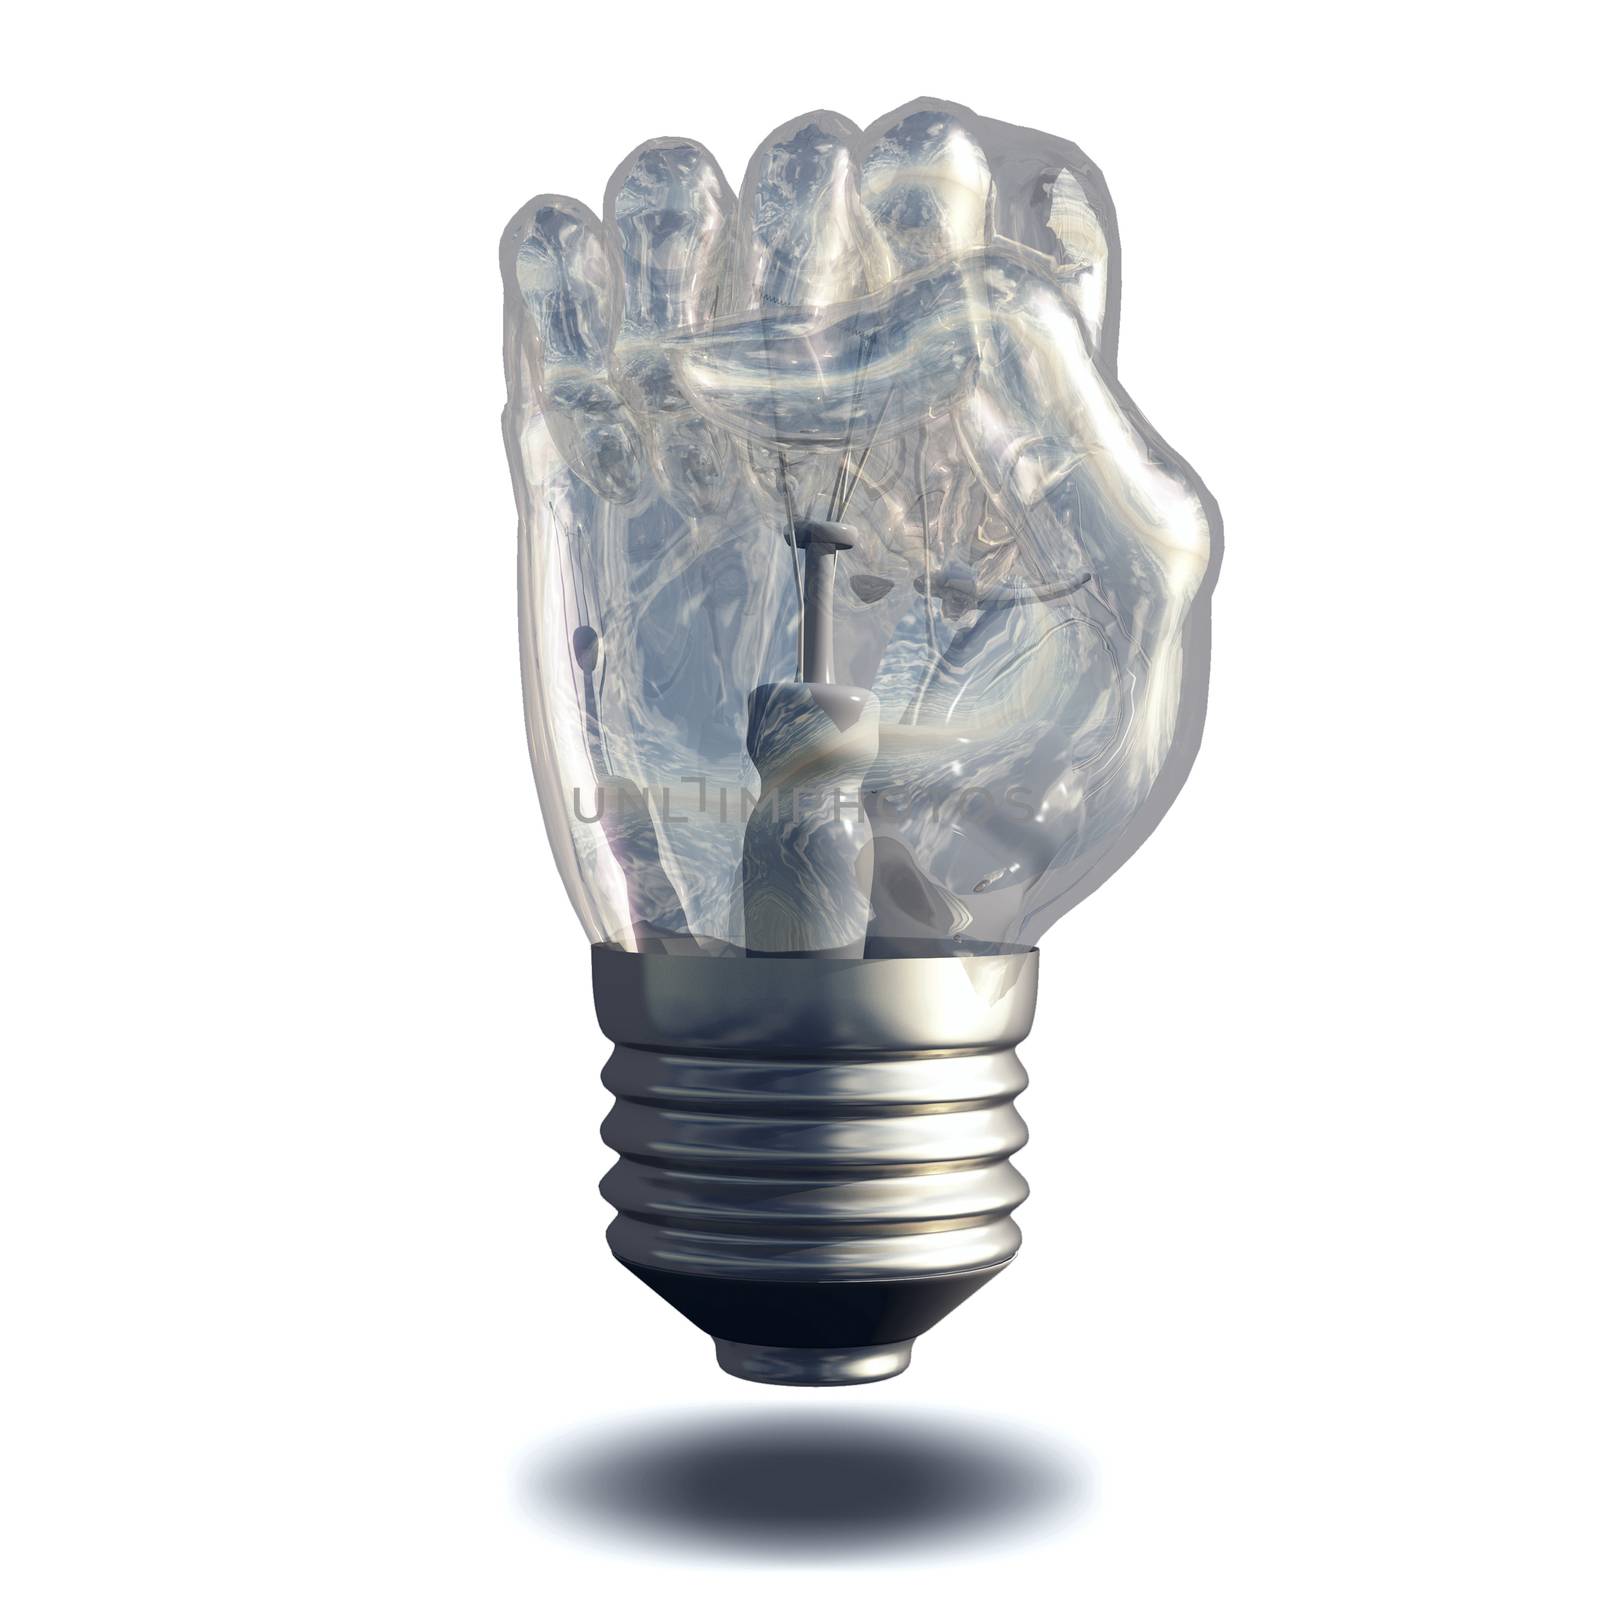 Light bulb in shape of human fist